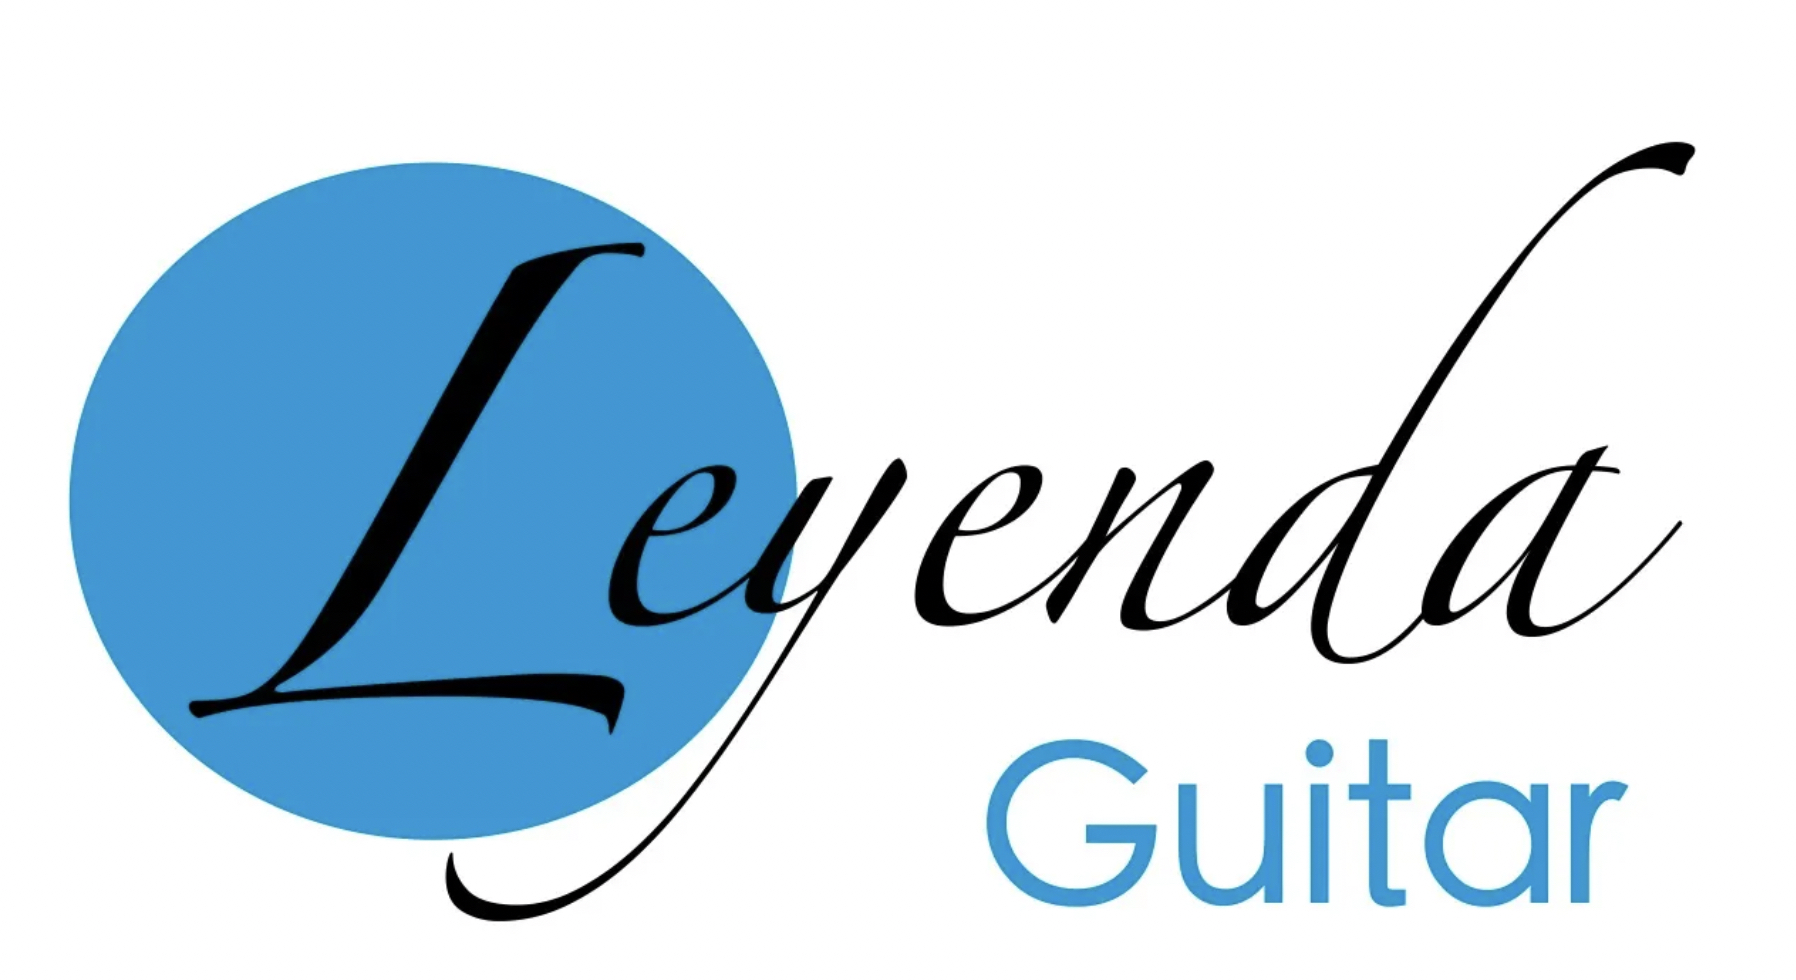 Leyenda Guitar